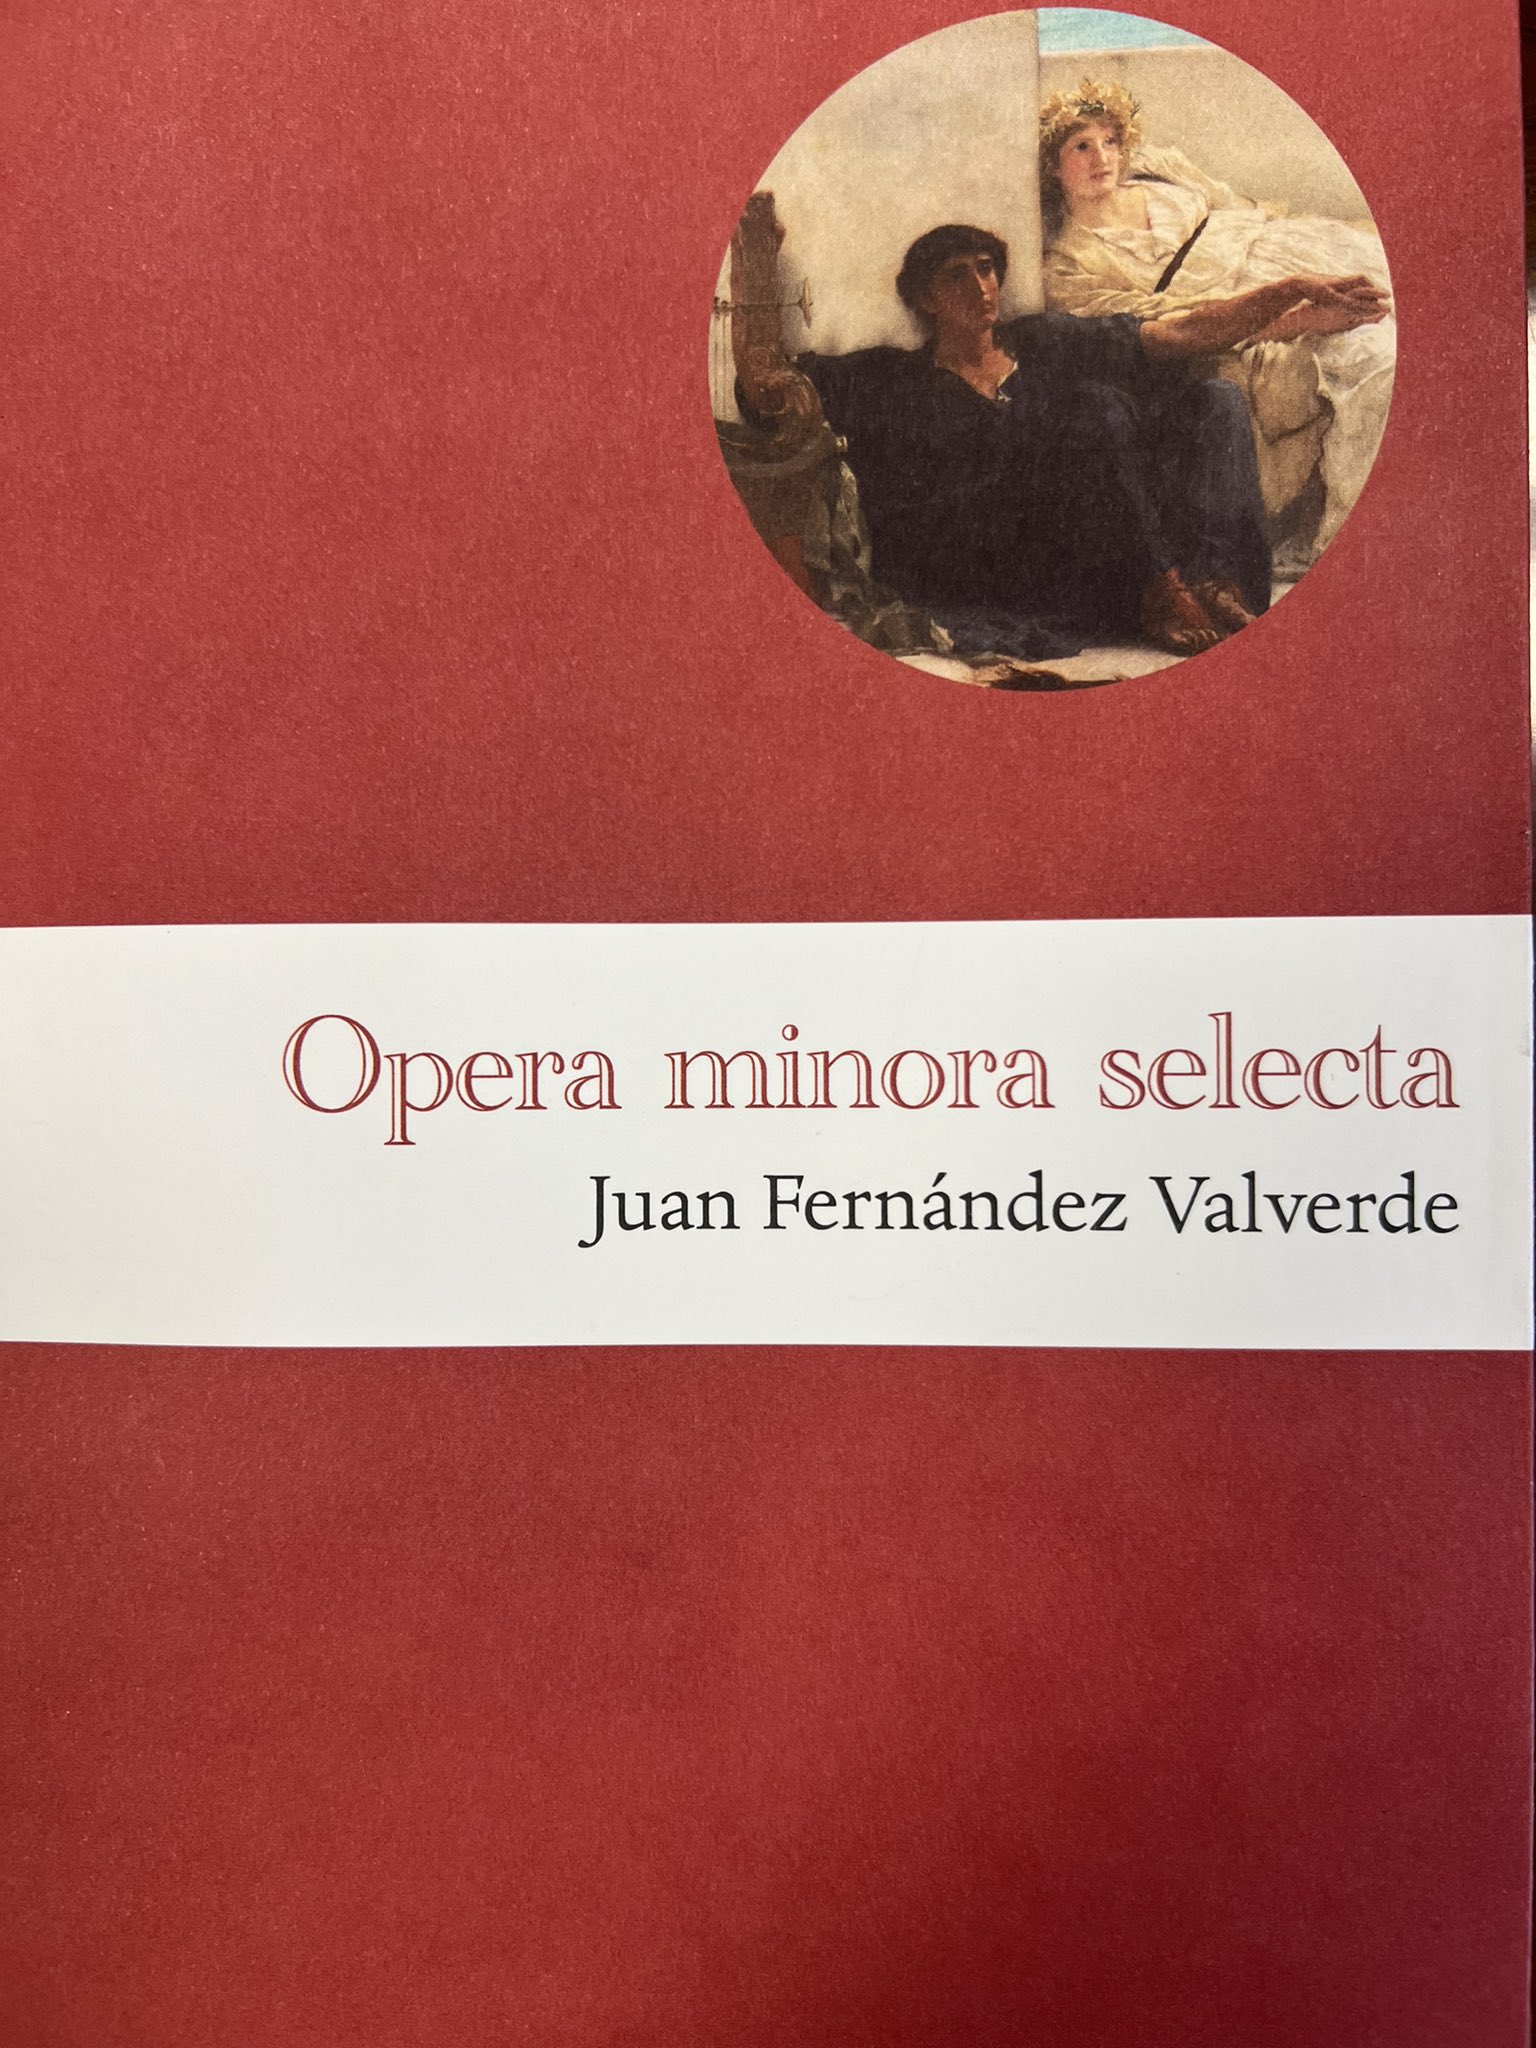 Imagen de portada del libro Opera minora selecta